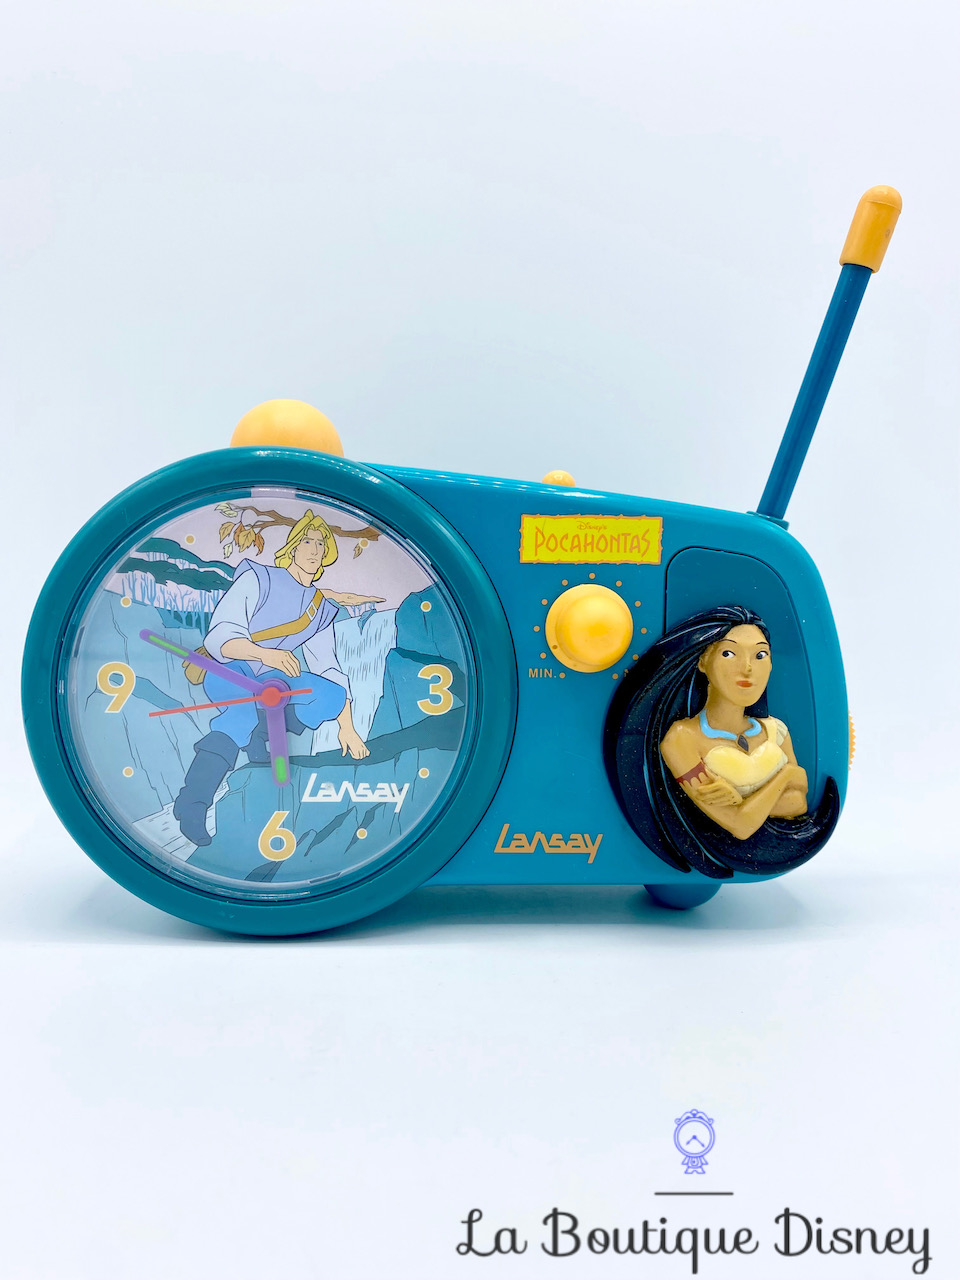 Radio Réveil Pocahontas Disney Lansay vintage John Smith horloge bleu